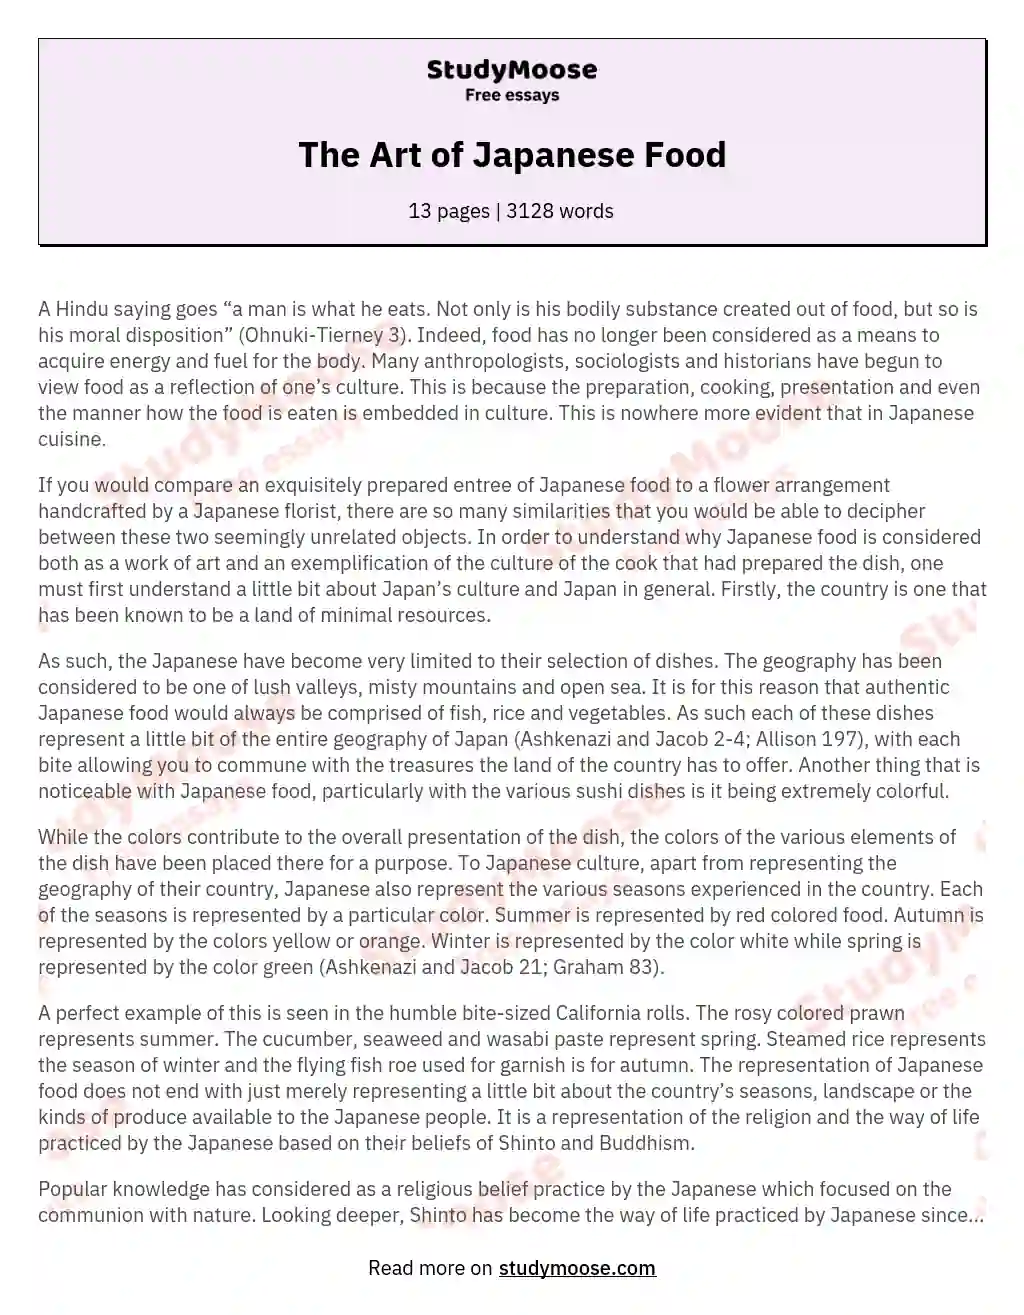 The Art of Japanese Food essay